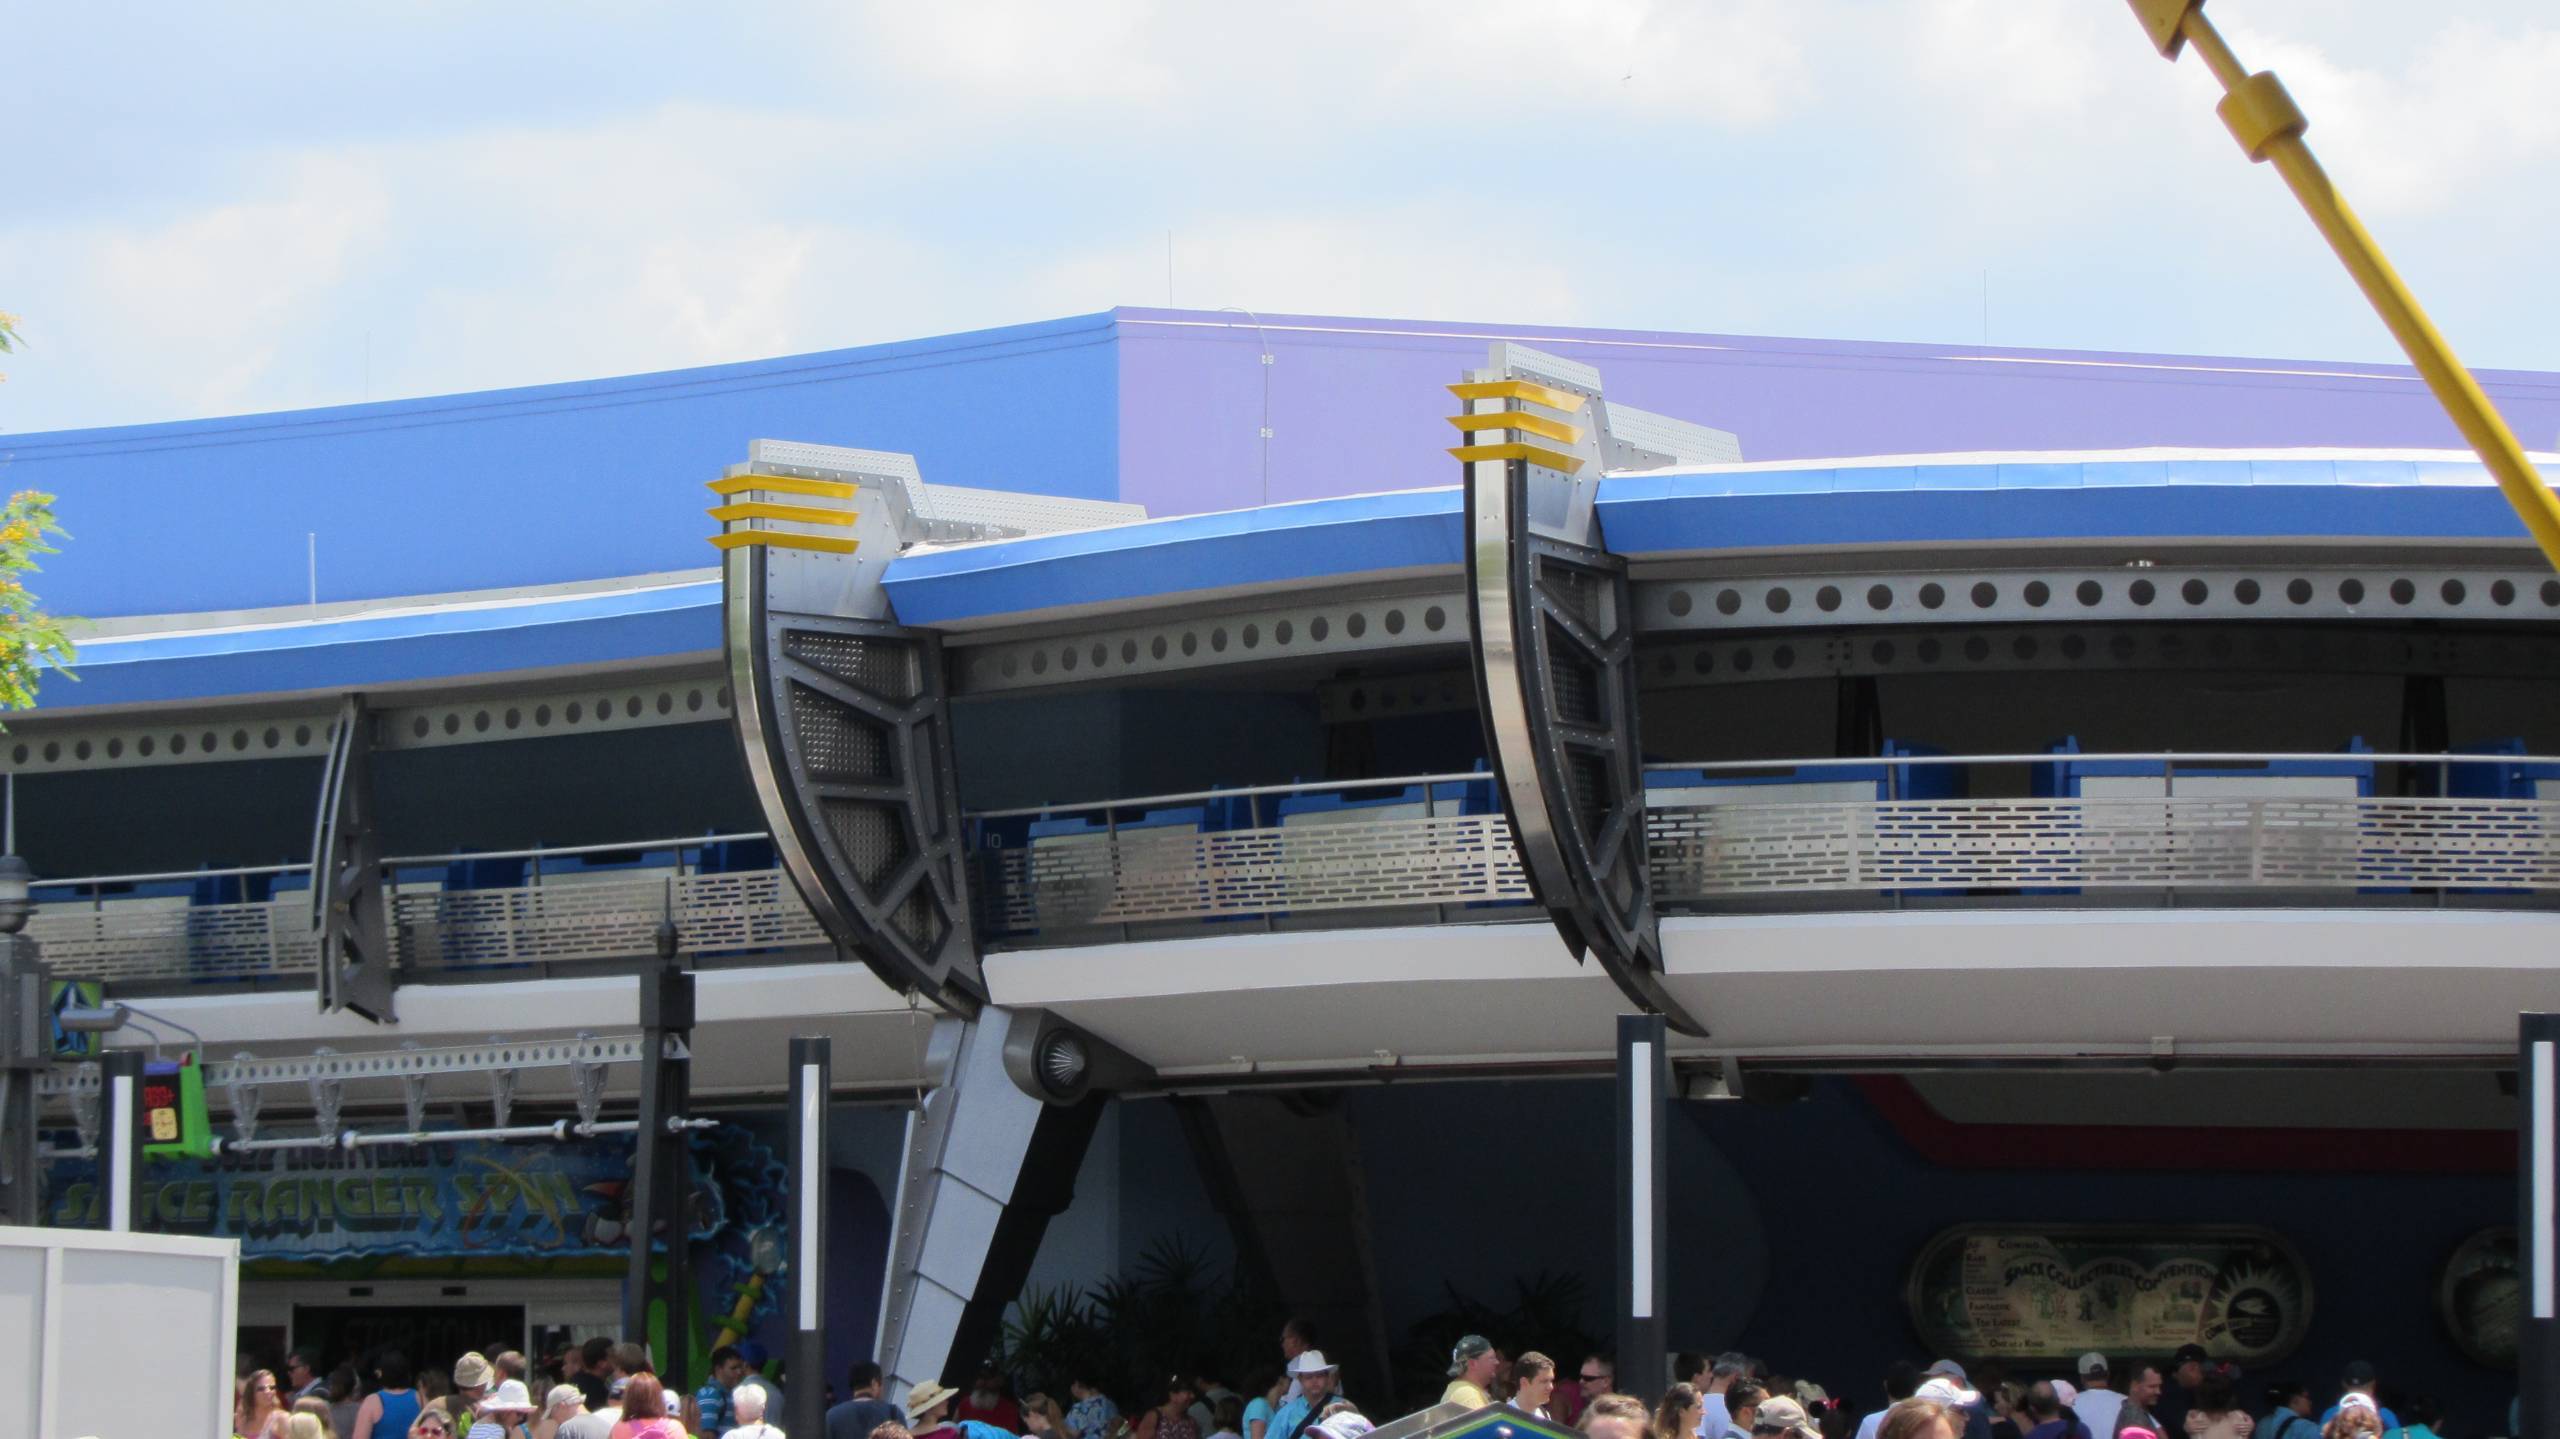 Tomorrowland Transit Authority and Astro Orbiter refurbishment